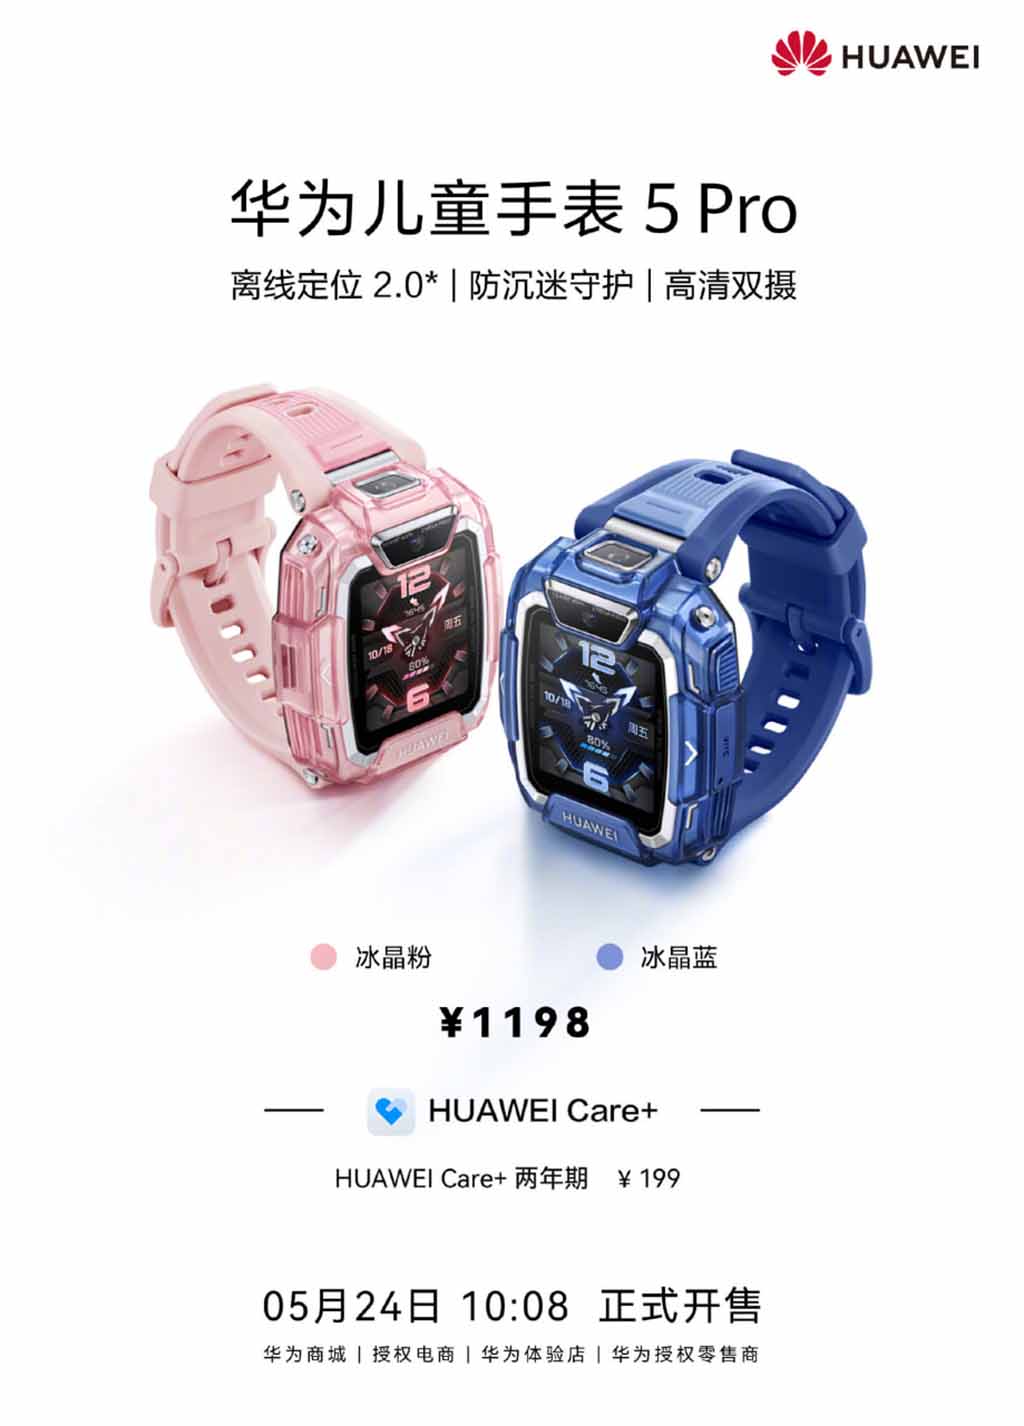 Huawei Children's Watch 5 Pro first sale